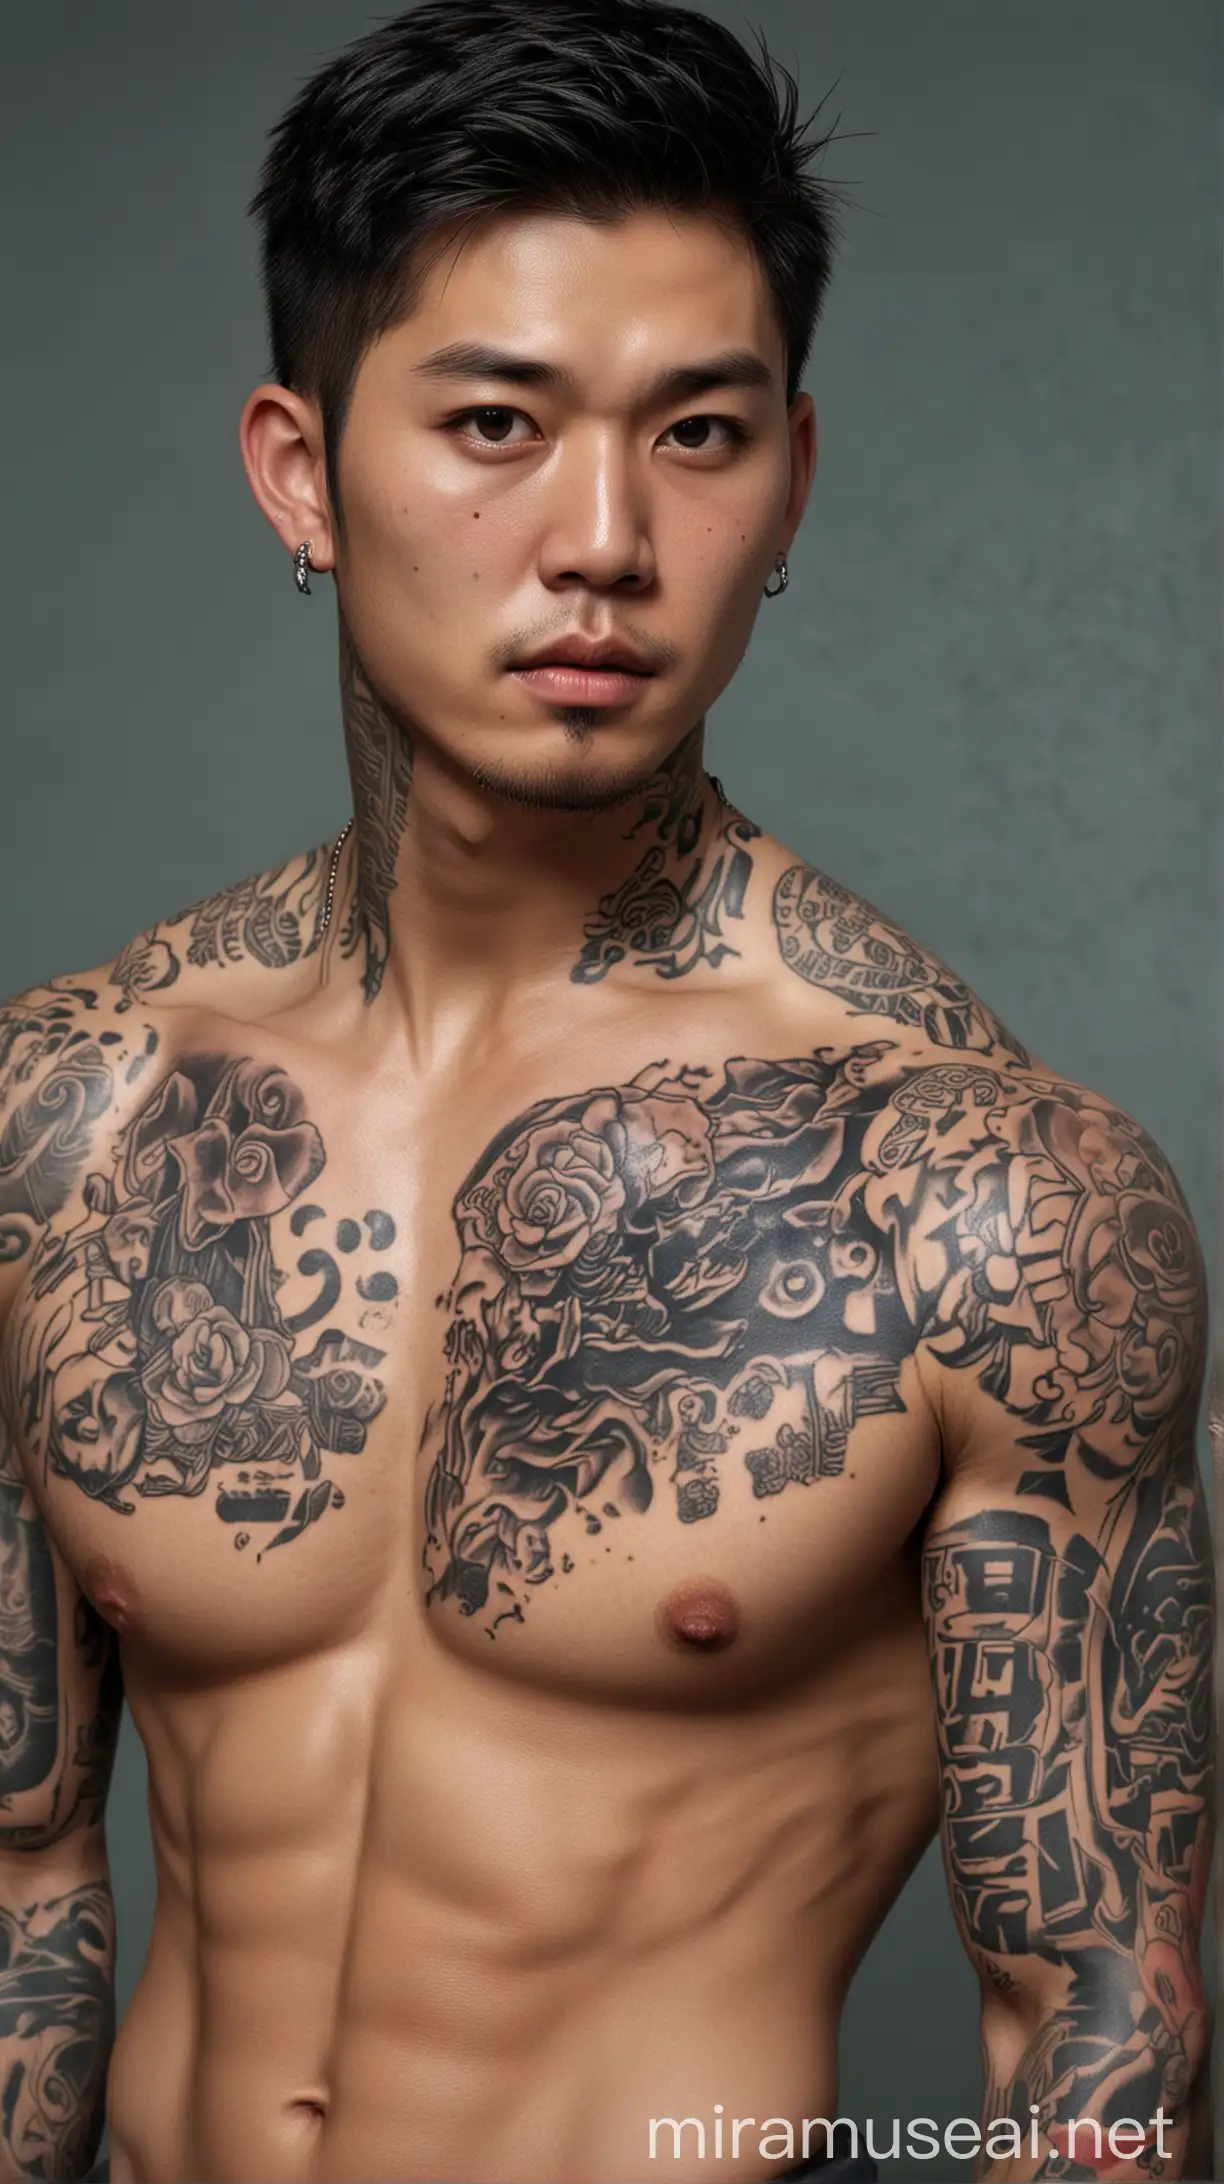 Handsome Korean Man with Tattooed Airsoft Gun in Artgerm Greg Rutkowski and Thomas Kinkade Style